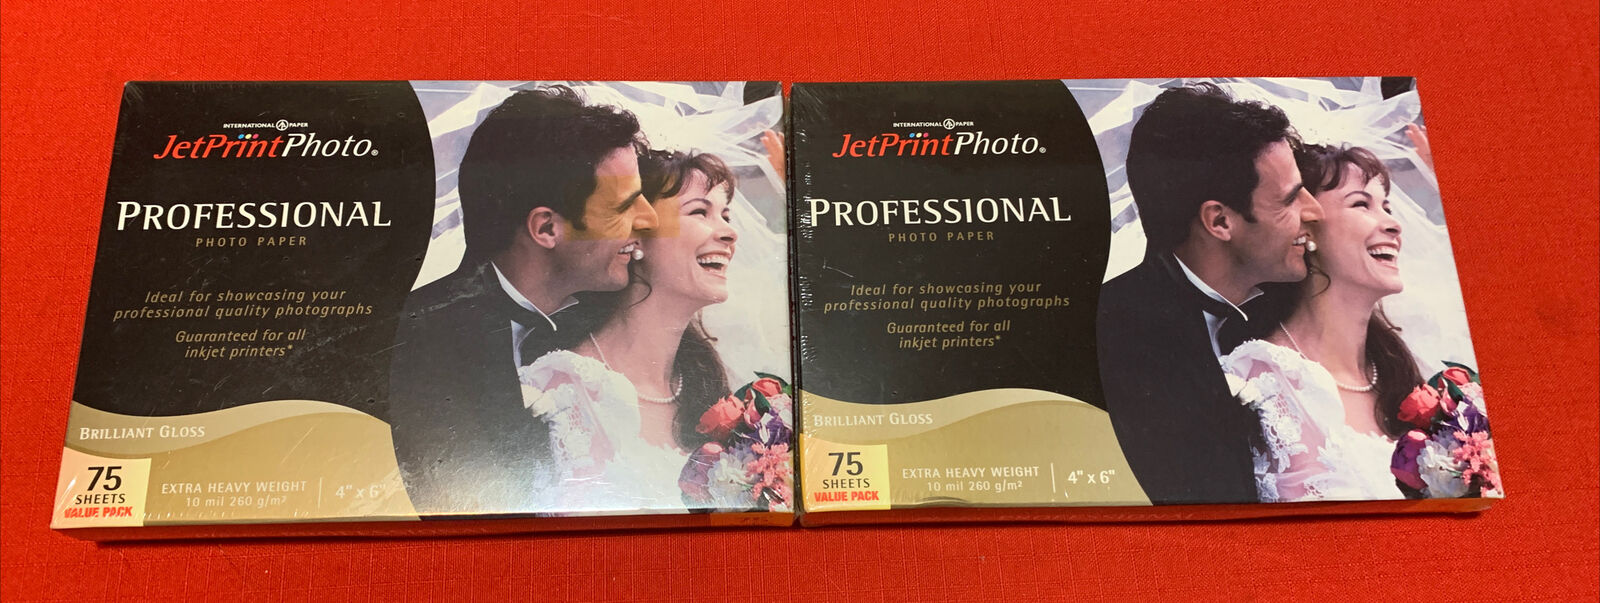 Lot Of 2 New Jet Print Photo Professional Photo Paper 4\